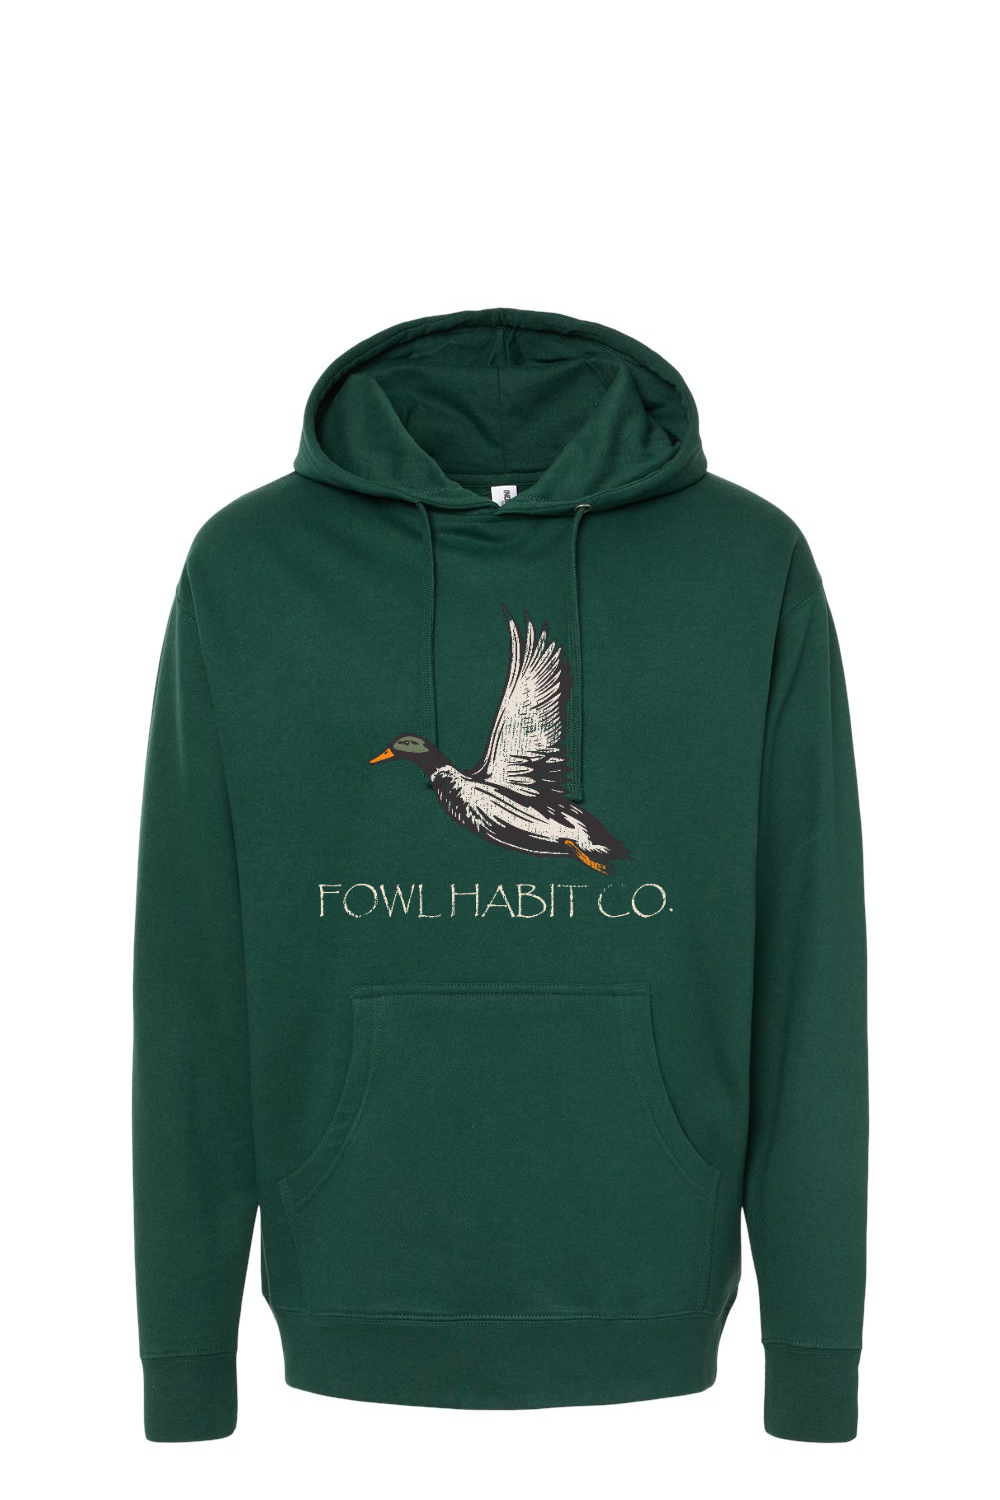 The Vintage Mallard Hoodie - Fowl Habit Co.